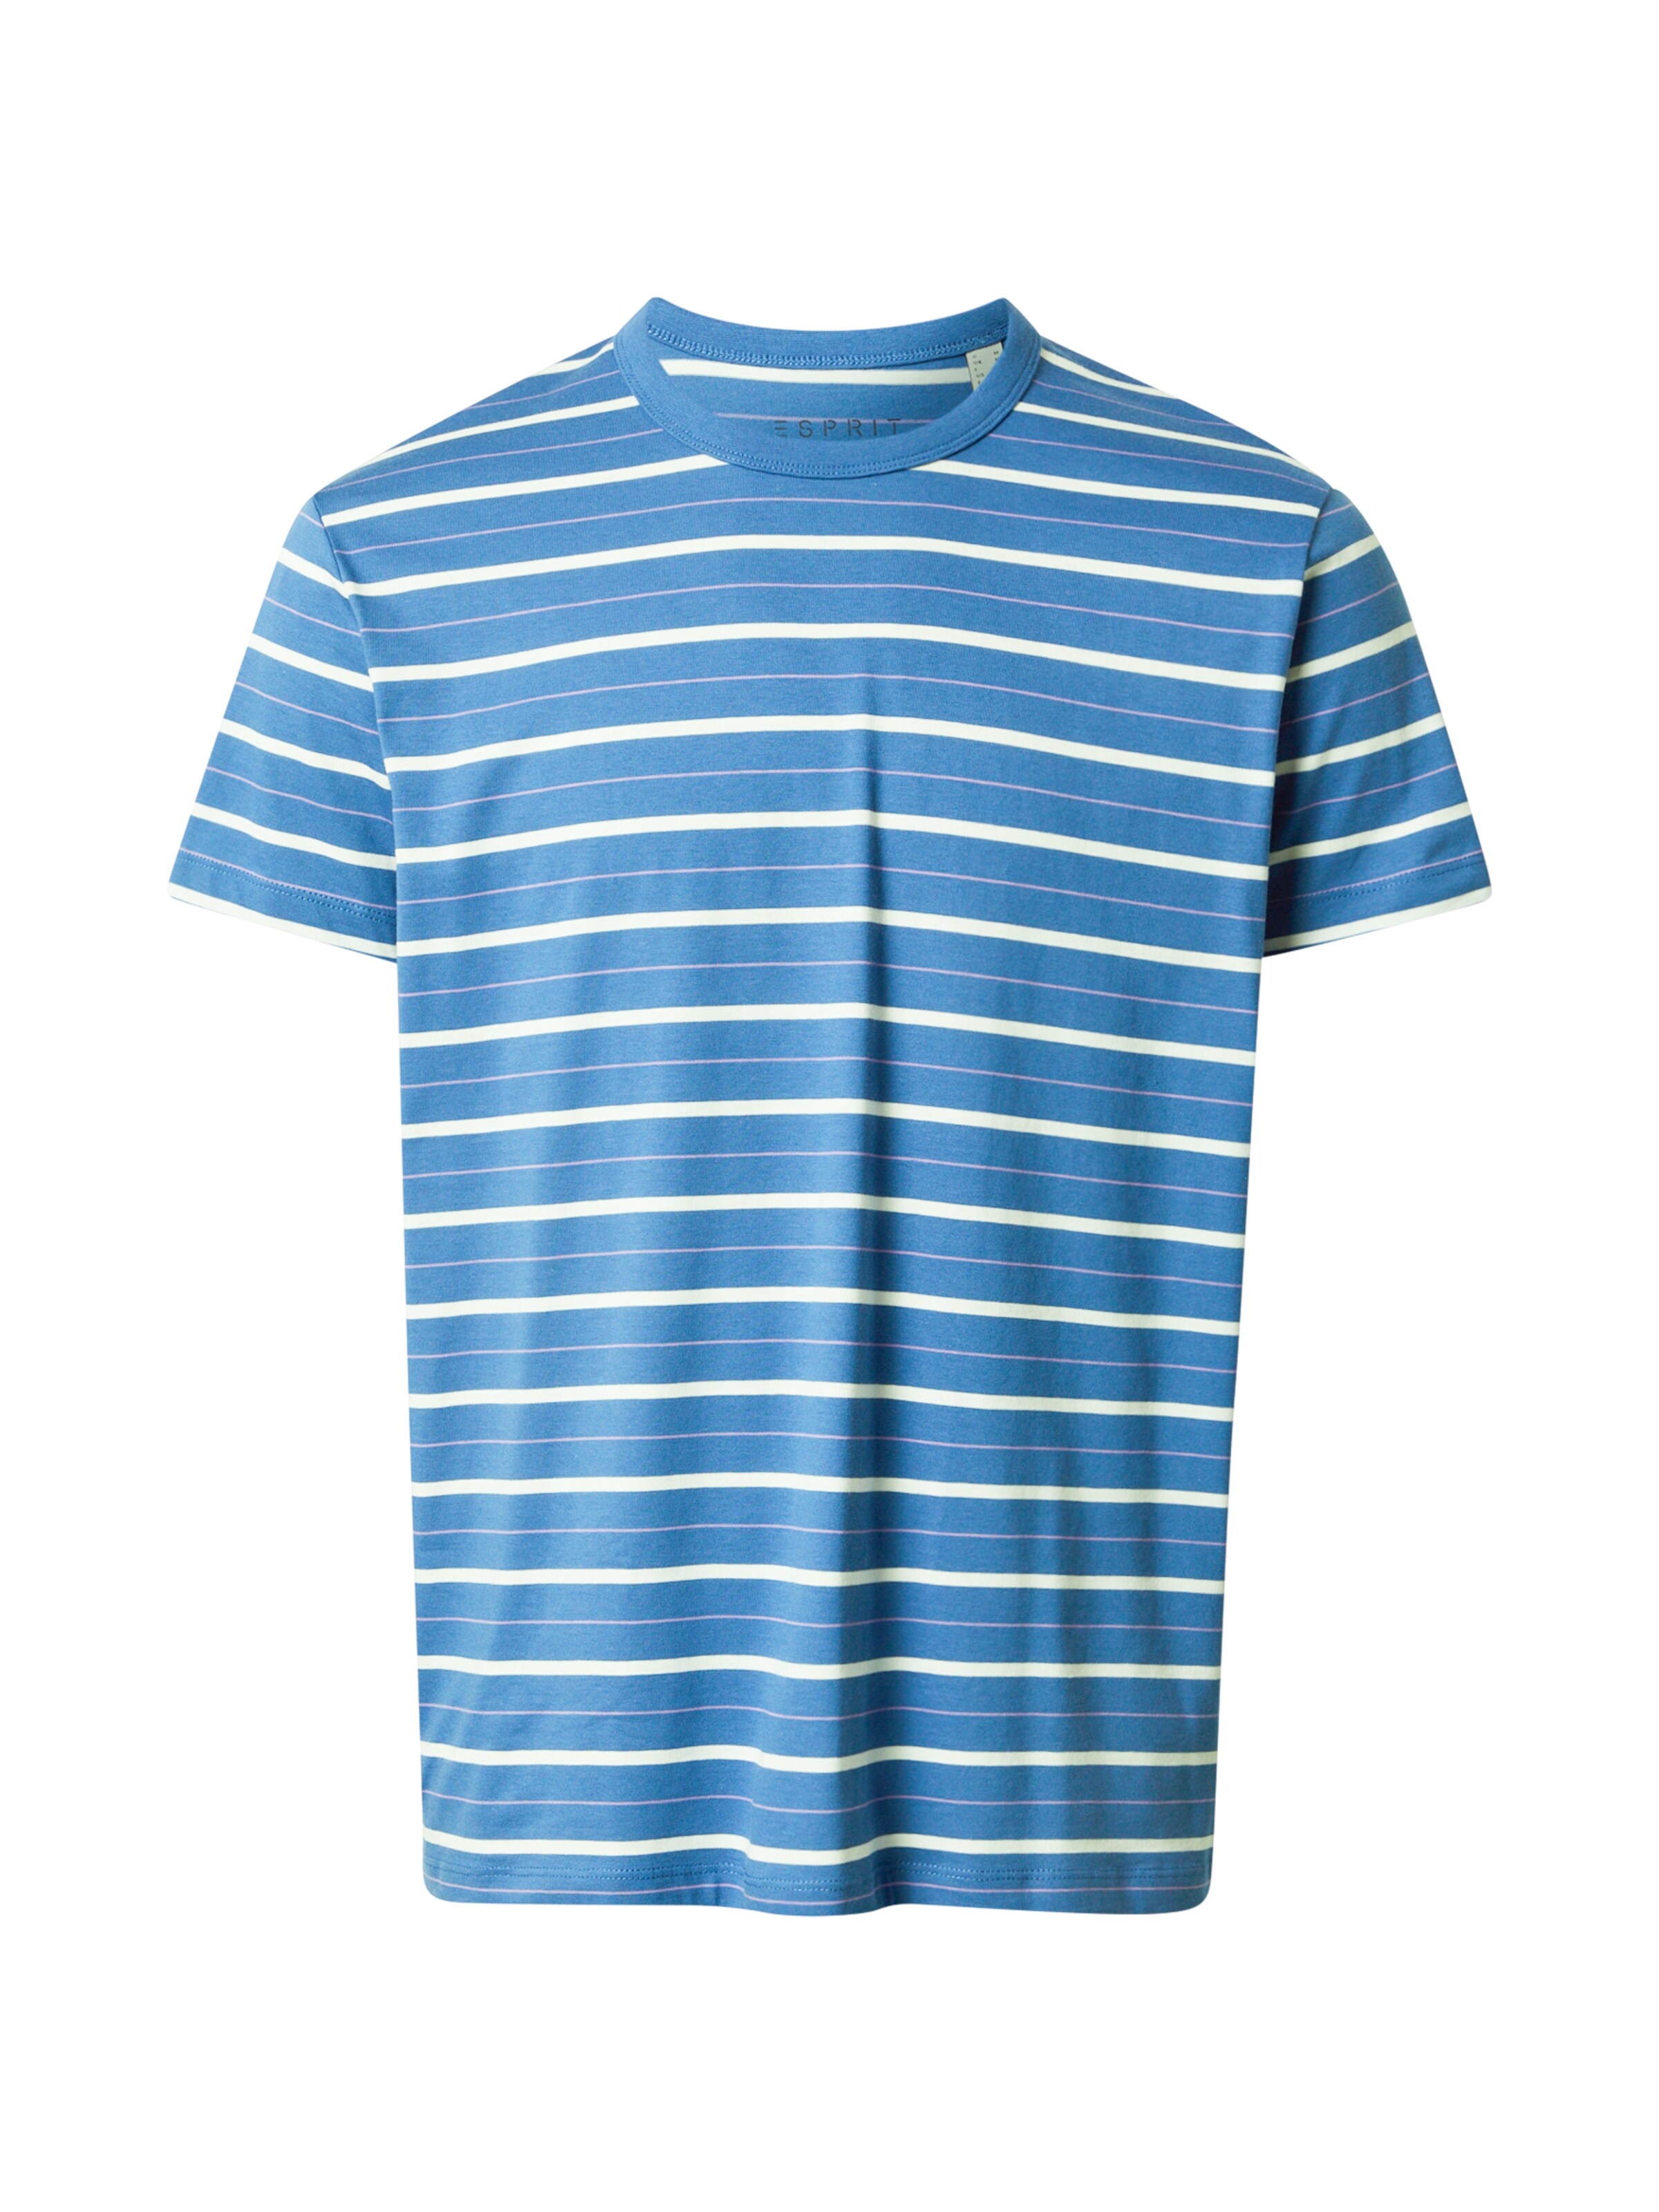 MODA BAMBINI Camicie & T-shirt Basic Esprit T-shirt Blu 4-5A sconto 91% 